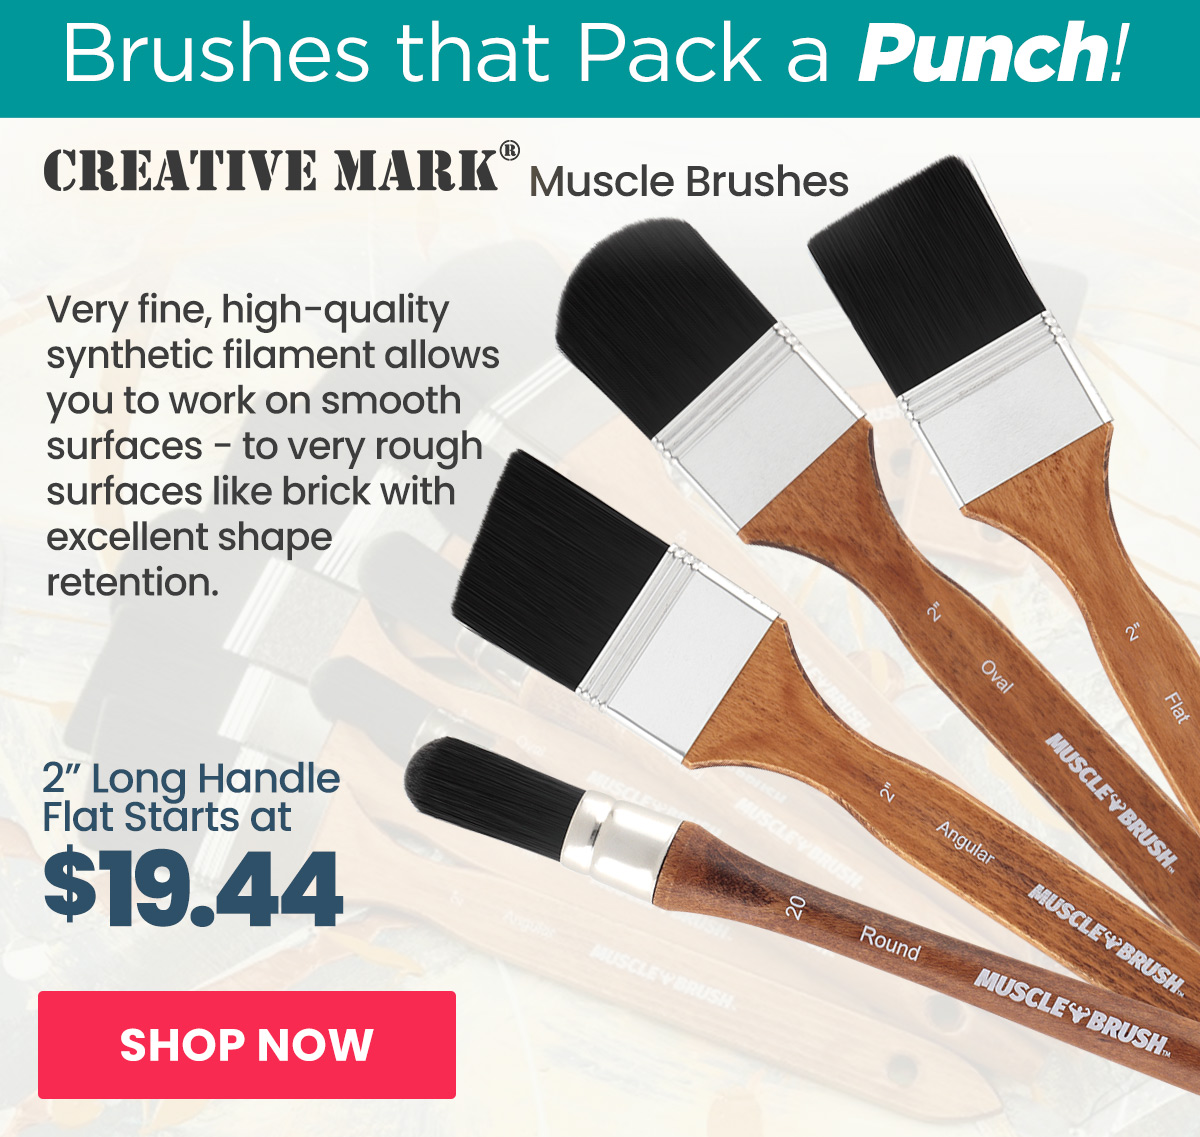 Creative Mark Muscle Brushes